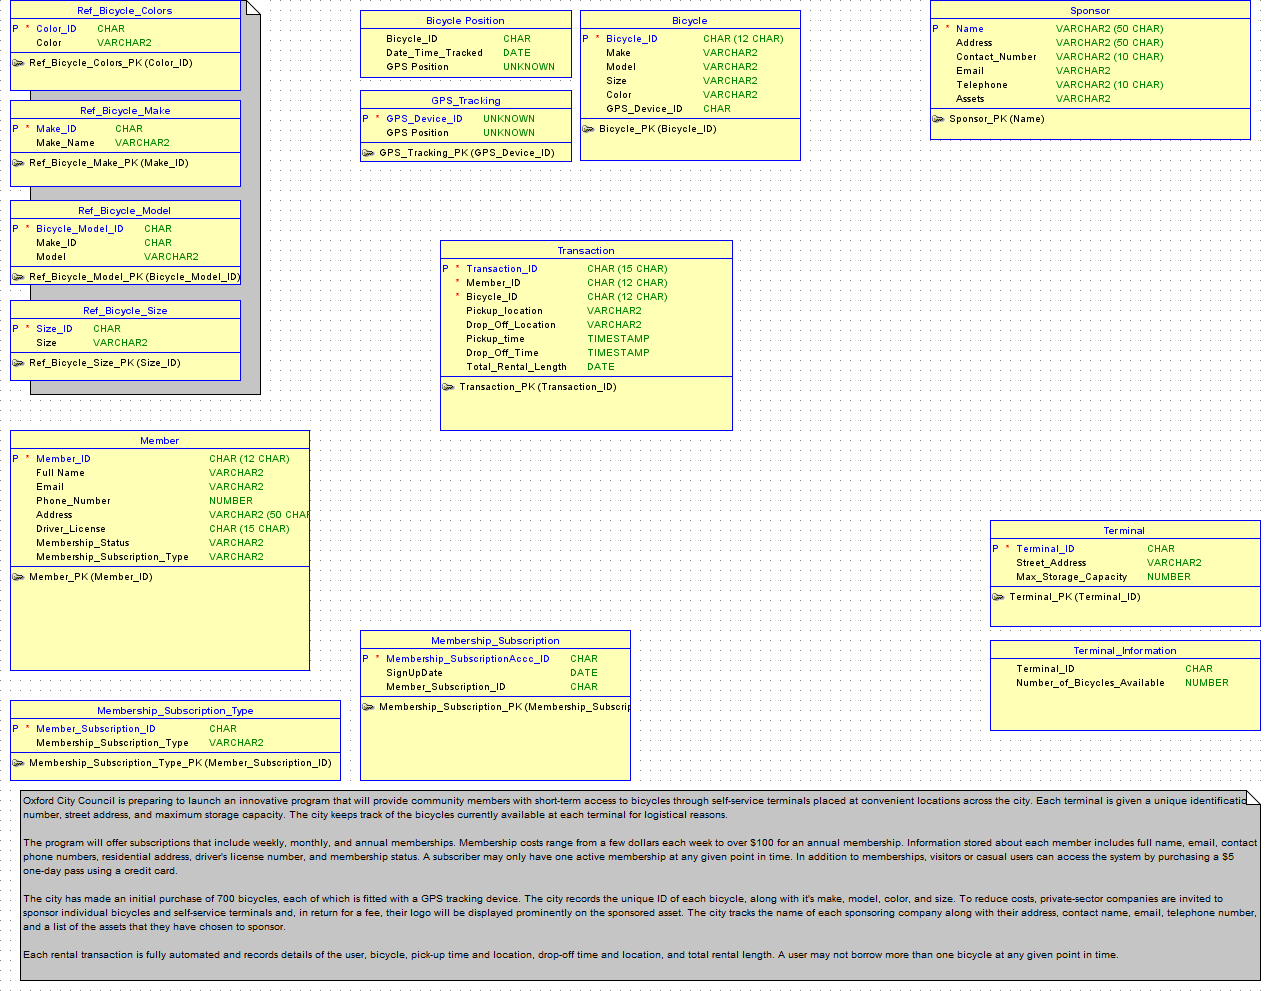 Database Design / Er Diagram - Database Administrators Stack intended for Database Design Er Diagram